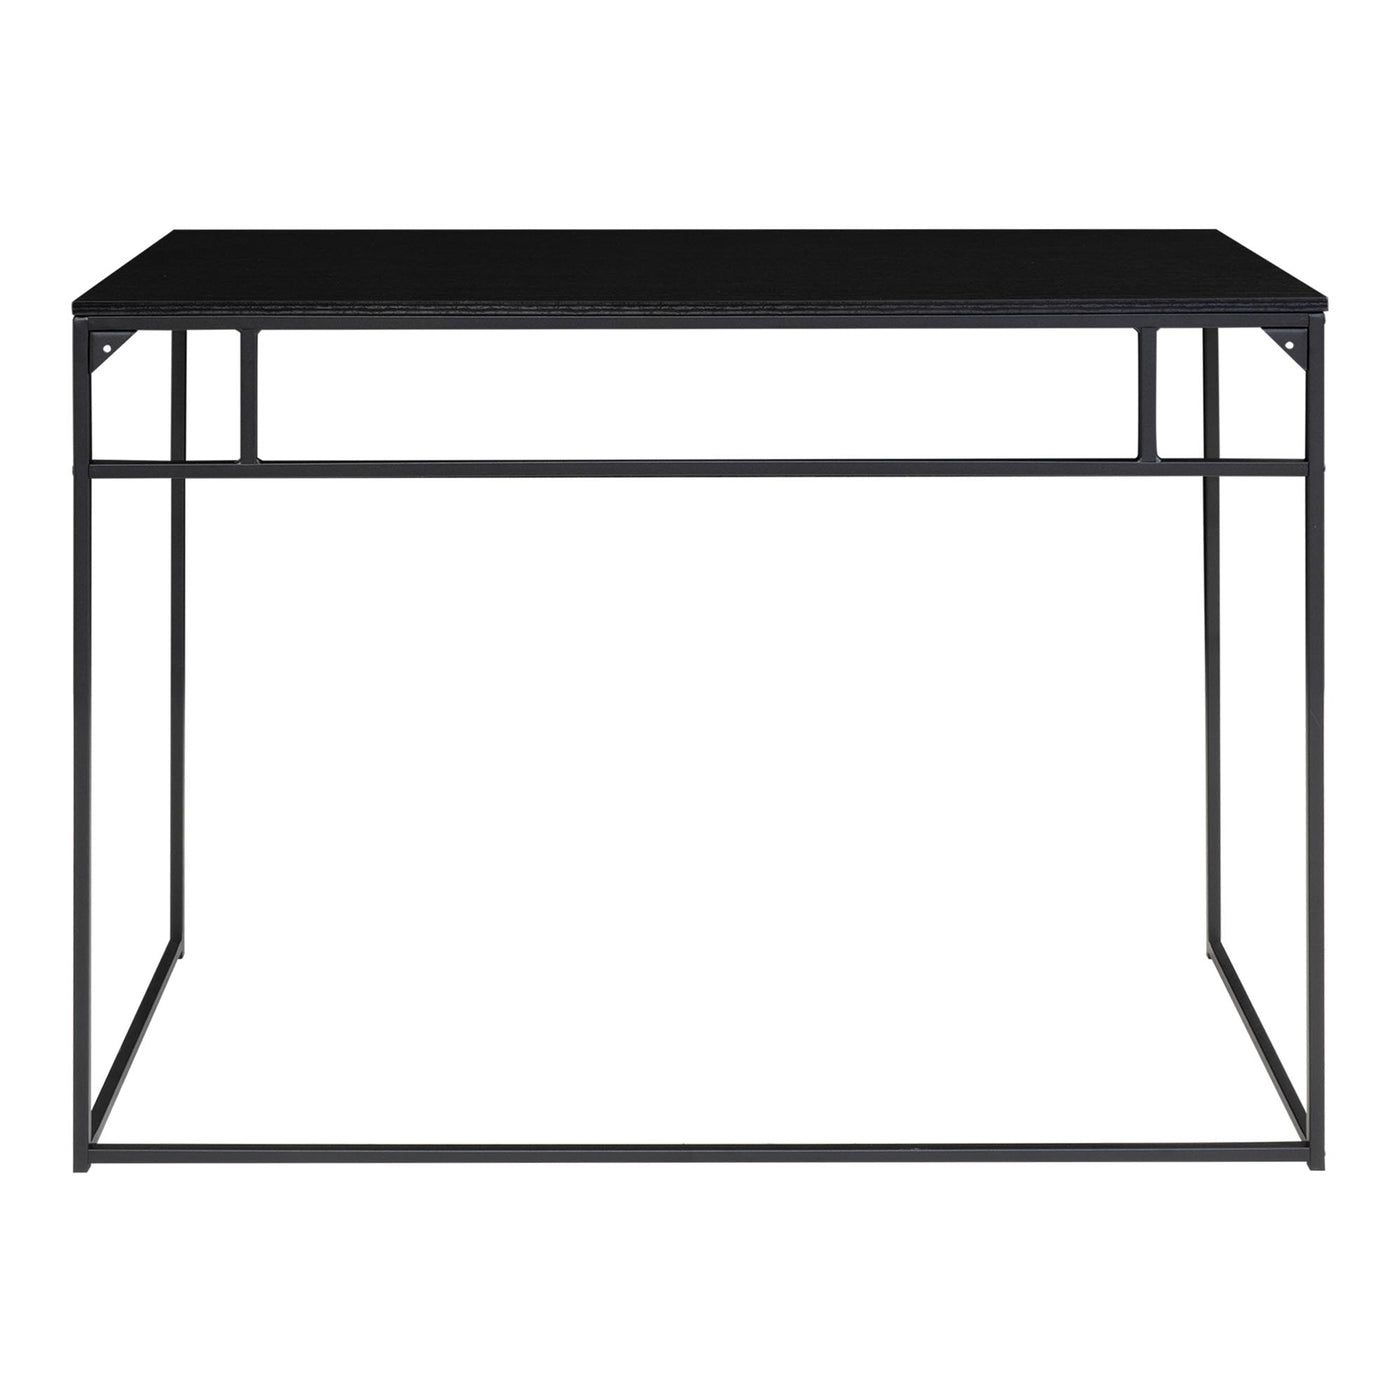 Vita pöytä 100 x 45 cm, musta - Mööpeli.com